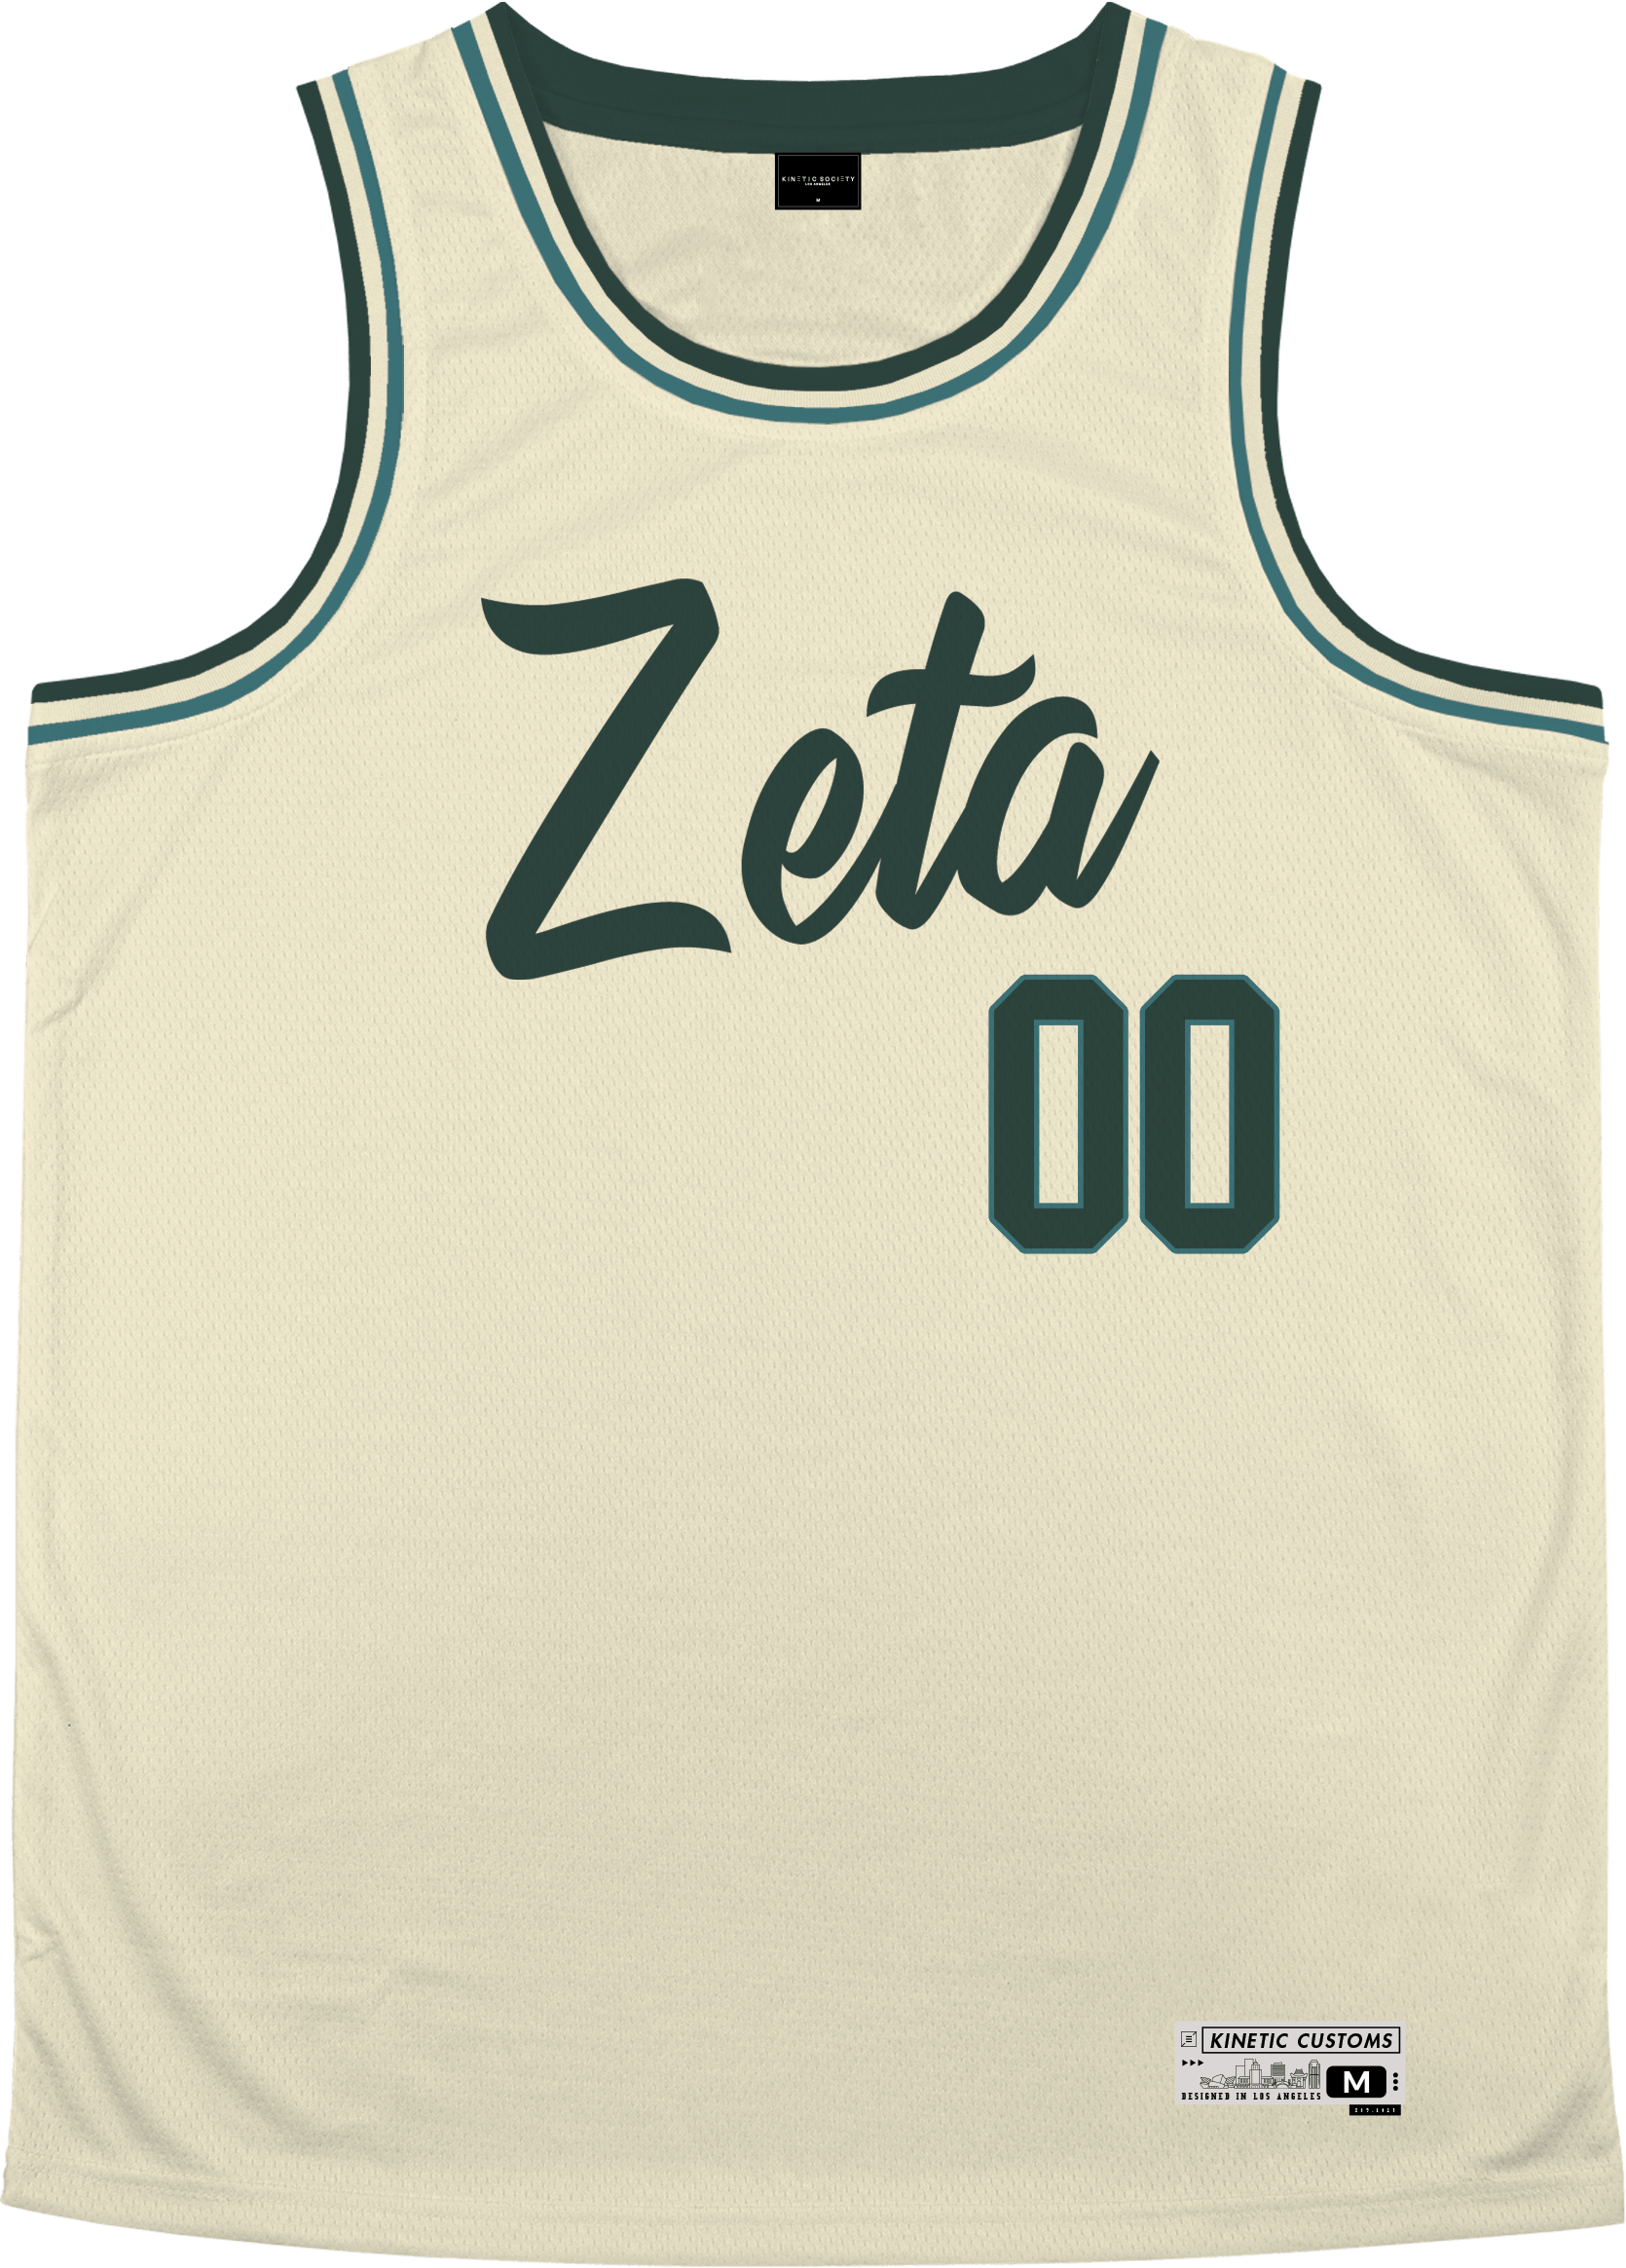 Zeta Beta Tau - Buttercream Basketball Jersey Premium Basketball Kinetic Society LLC 